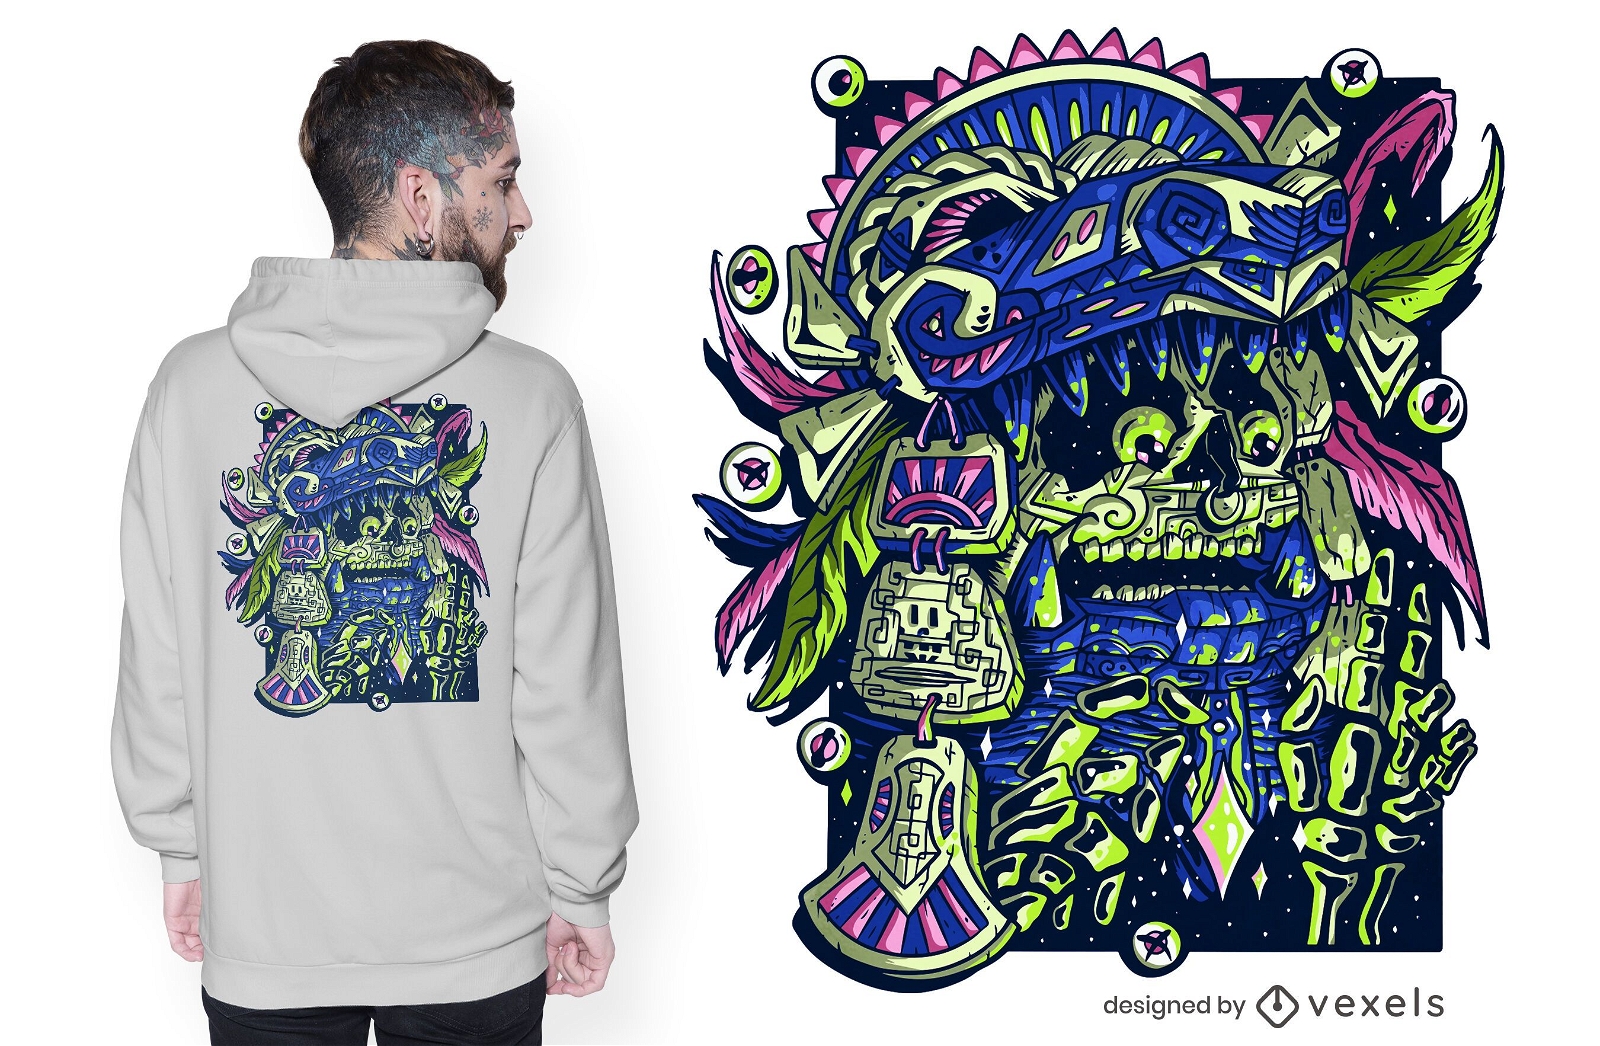 Aztec warrior t-shirt design